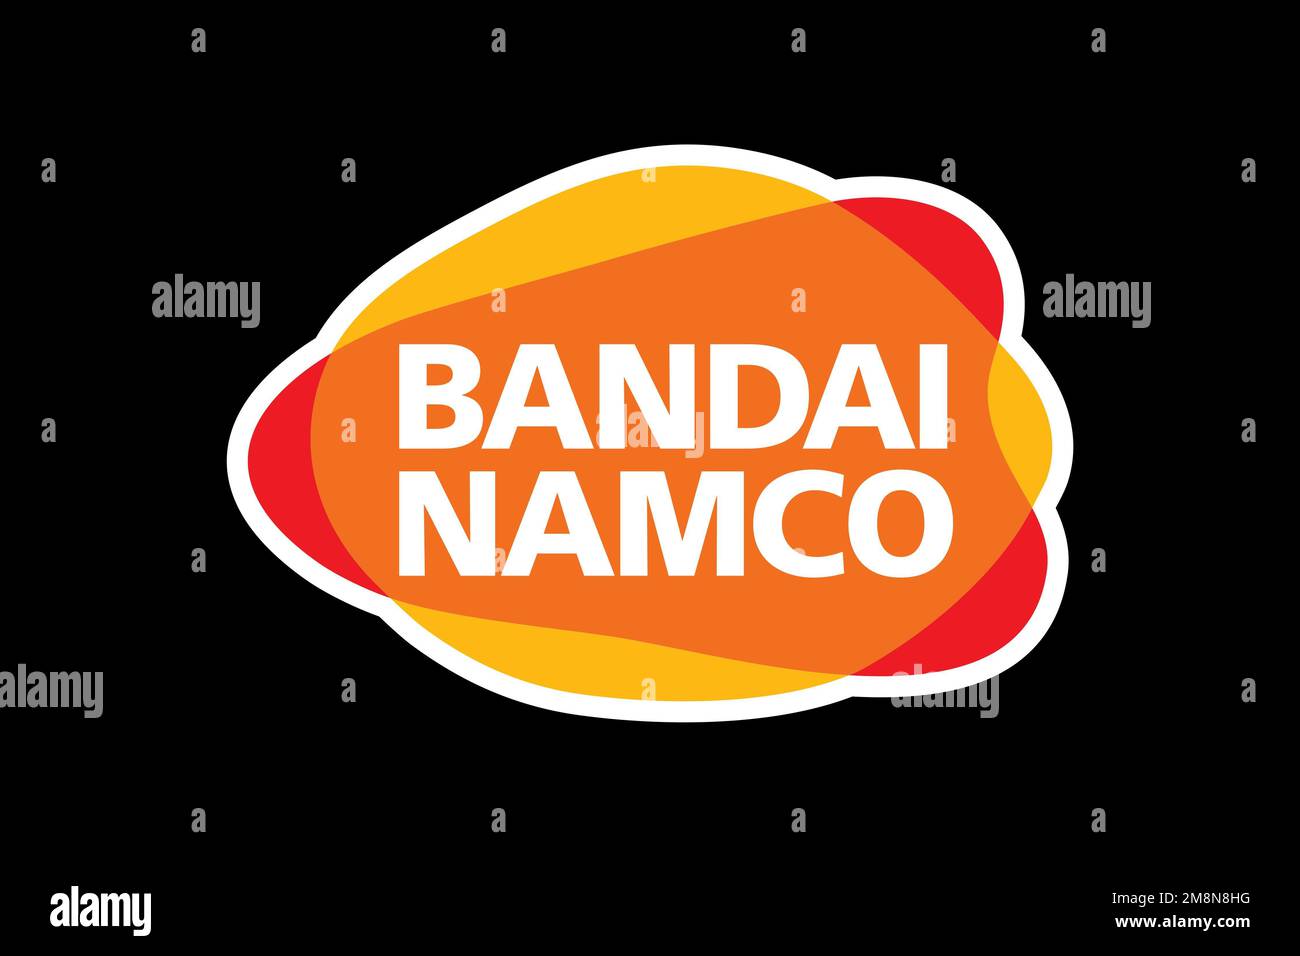 Bandai namco logo hi-res stock photography and images - Alamy